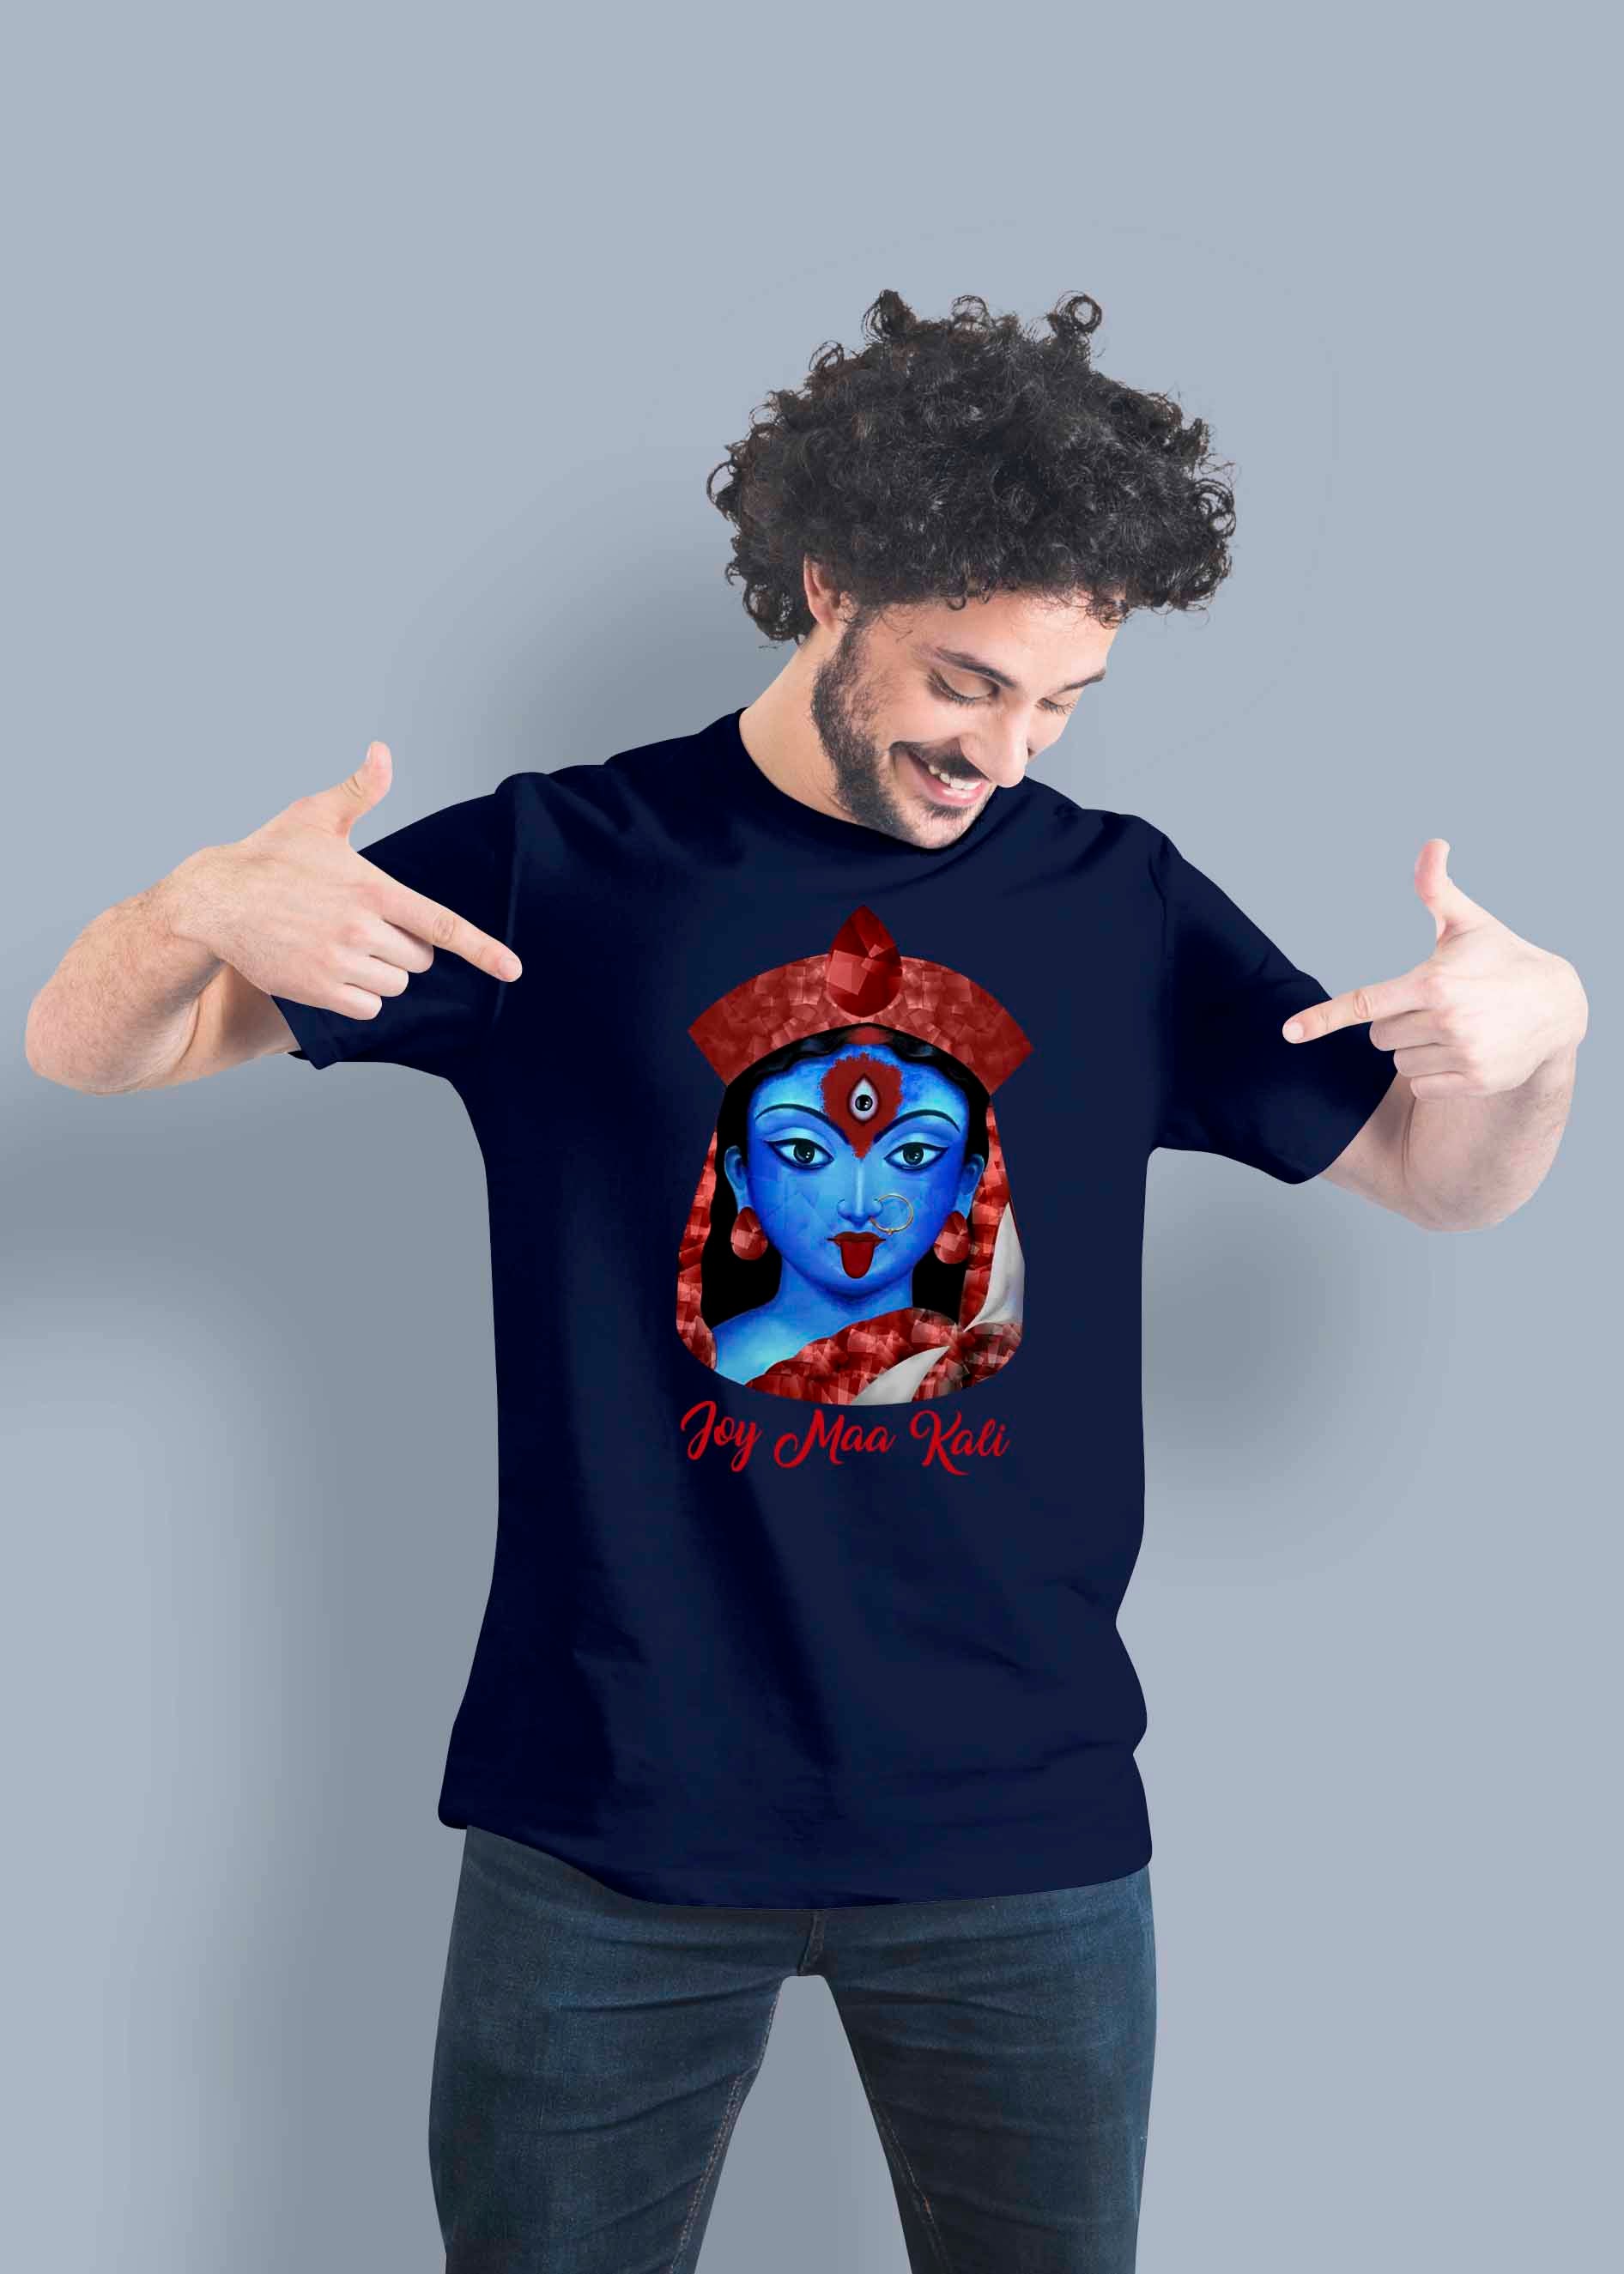 Kali Face Printed Half Sleeve Premium Cotton T-shirt For Men